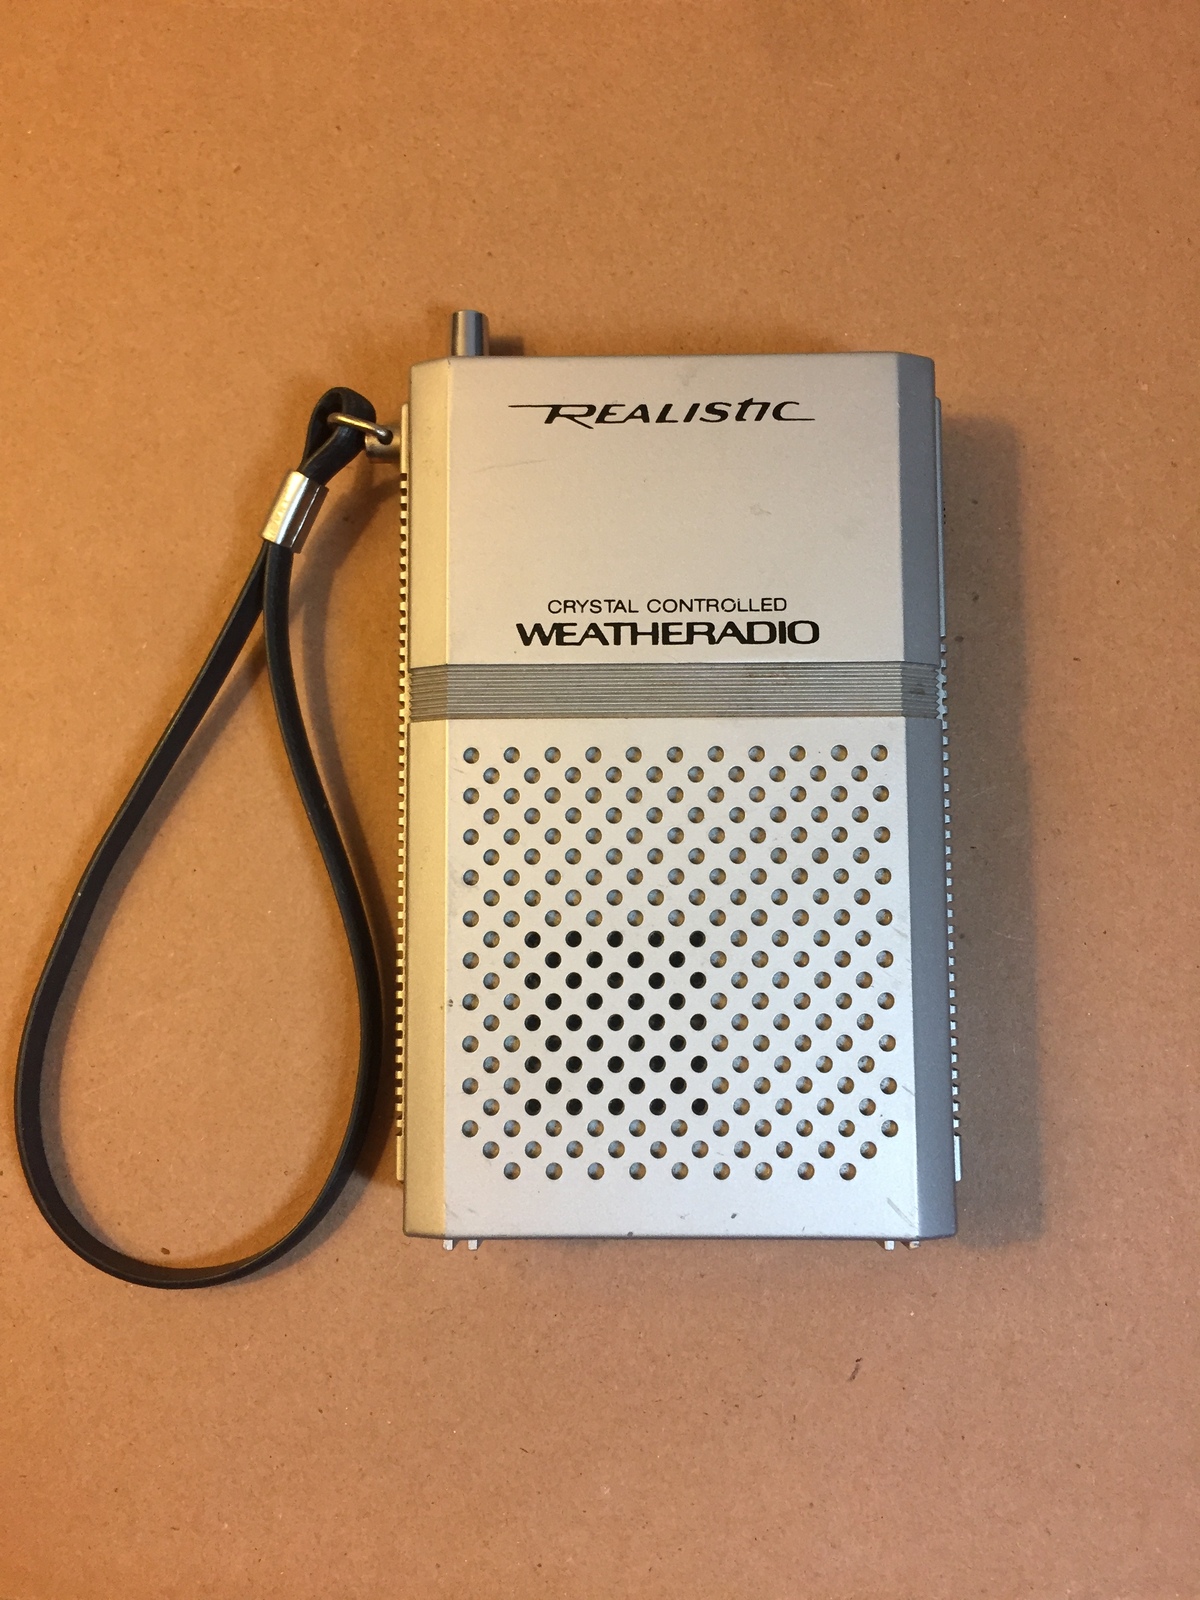 Vintage Realistic Crystal Controlled Hand-held Weatheradio (Radio Shack) - $22.00